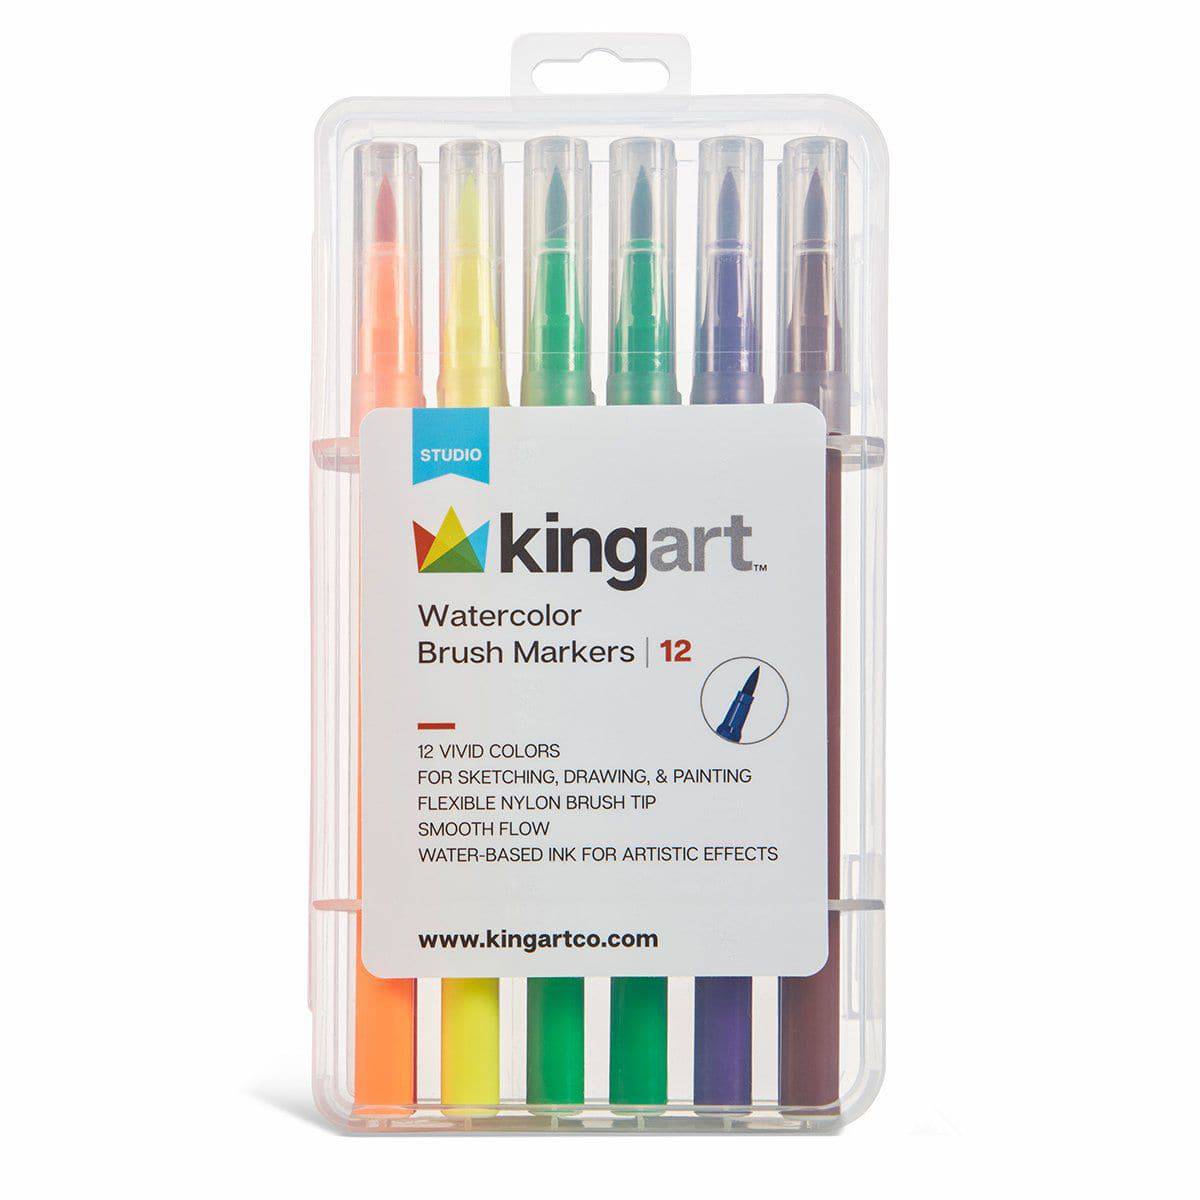 KINGART Watercolor Brush Markers 36 Piece 